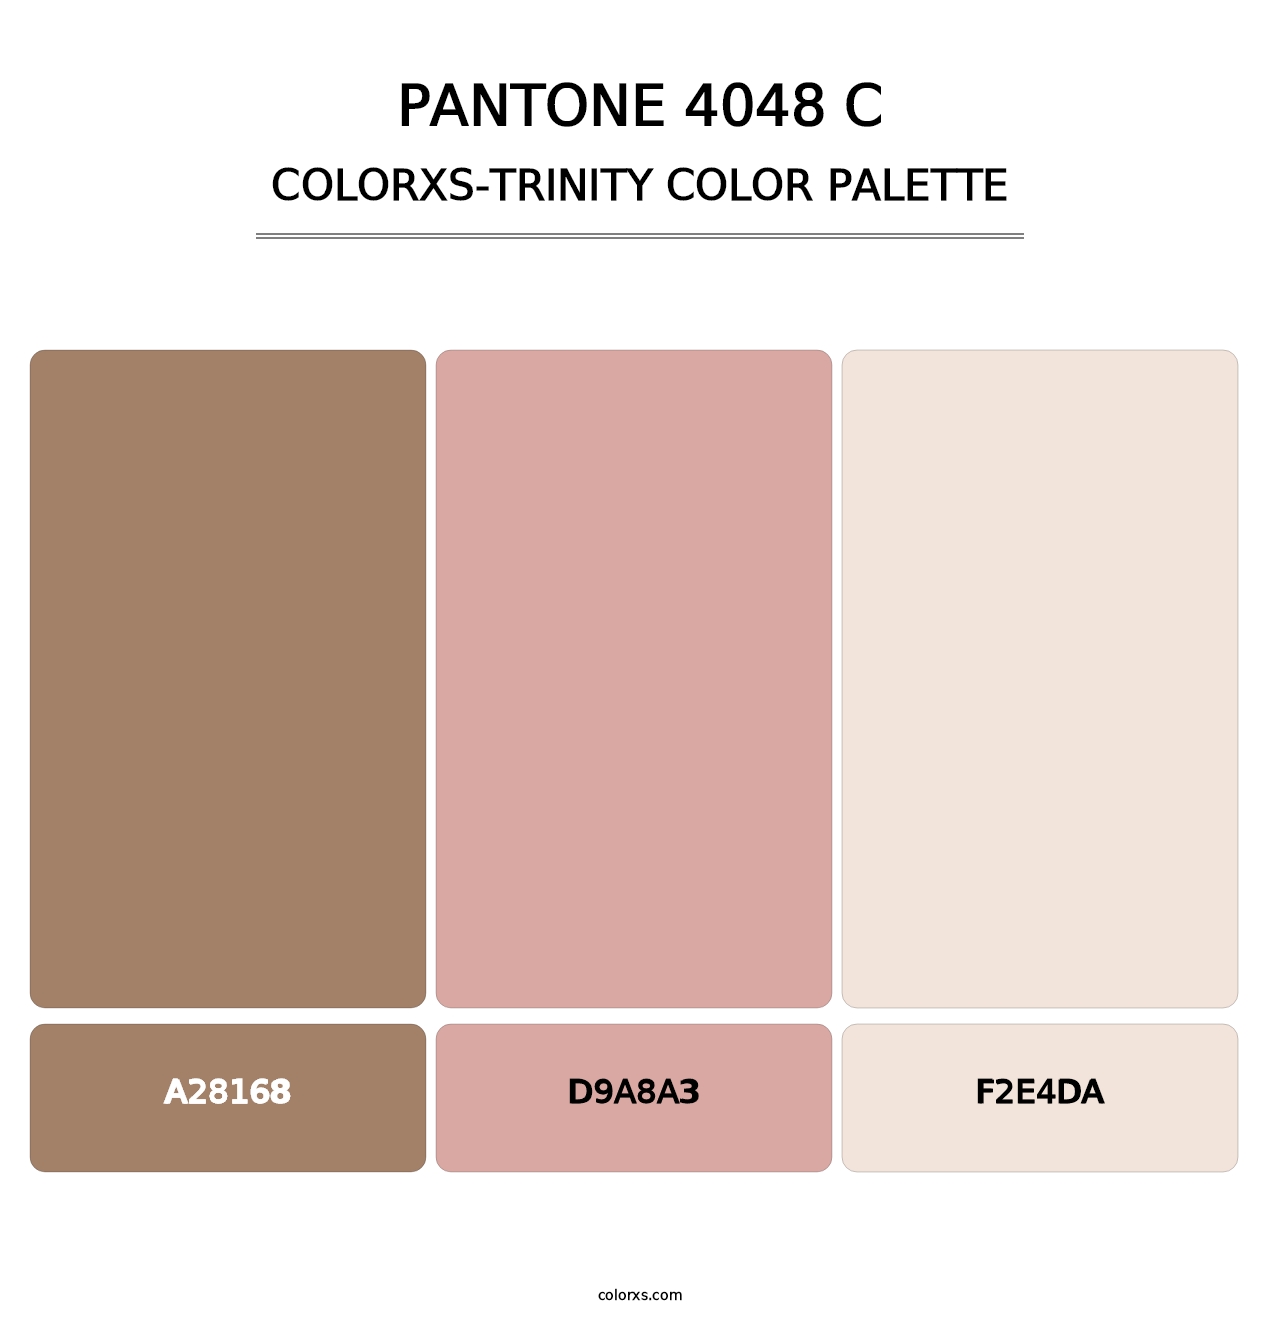 PANTONE 4048 C - Colorxs Trinity Palette